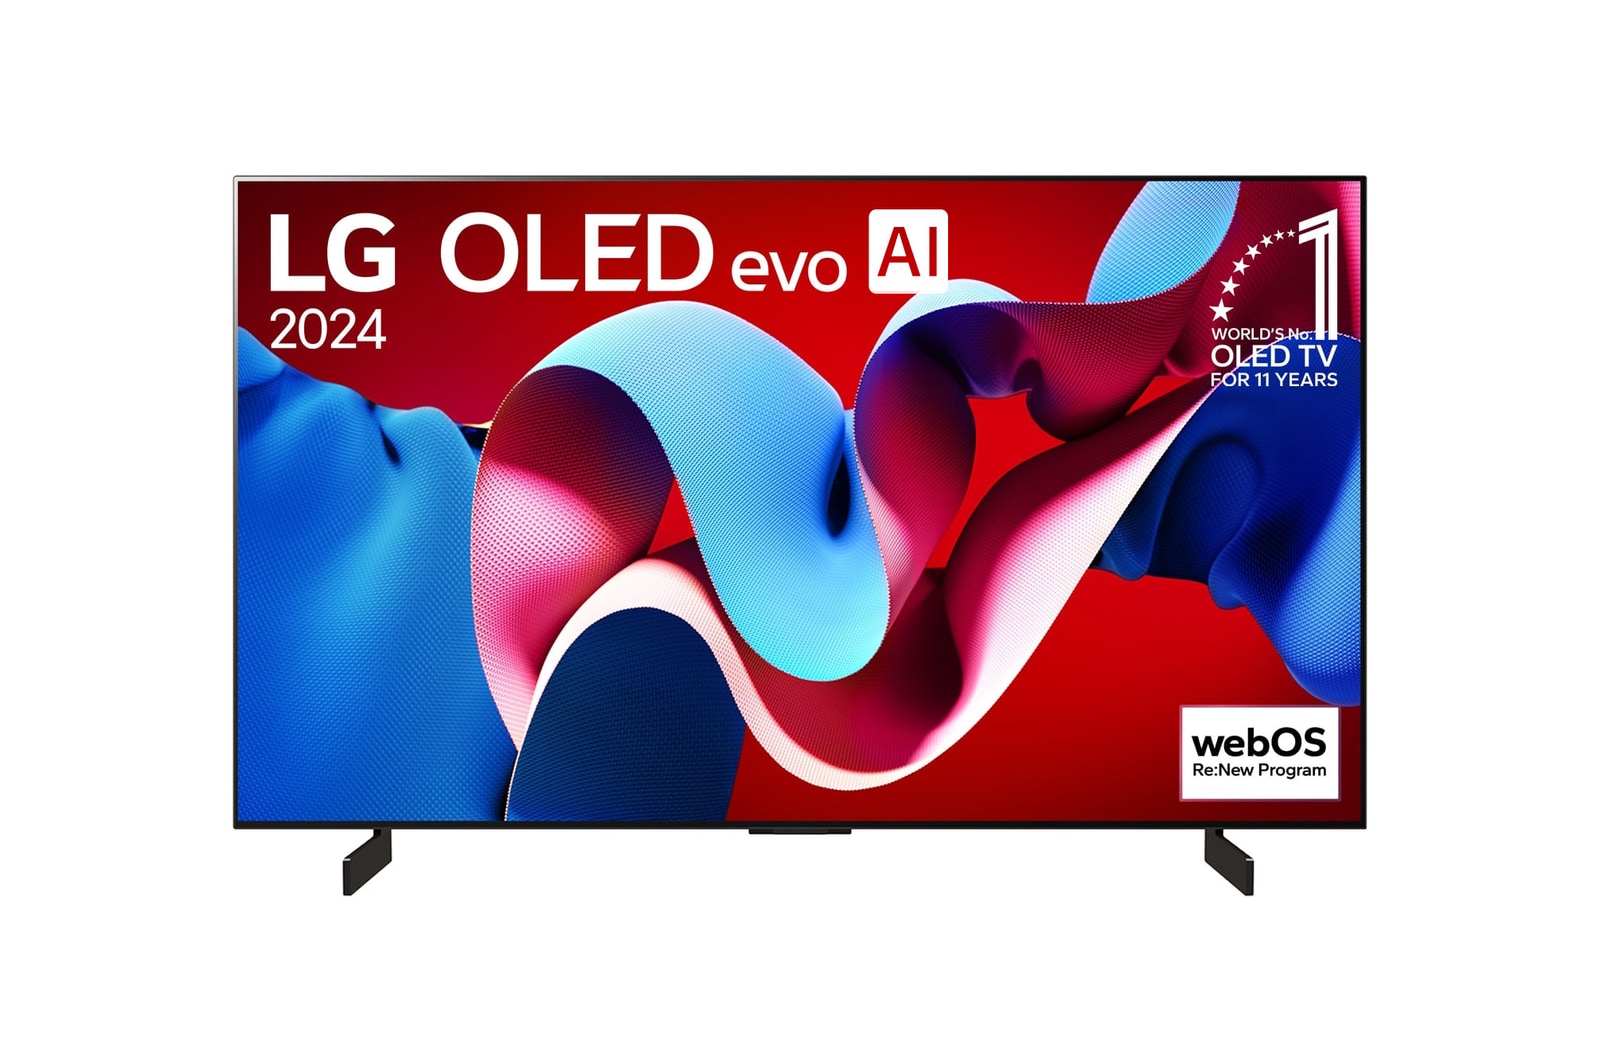 Widok z przodu LG OLED evo AI TV, OLED C4, logo emblematu „11 Years of World Number 1 OLED” i logo programu webOS Re:New na ekranie